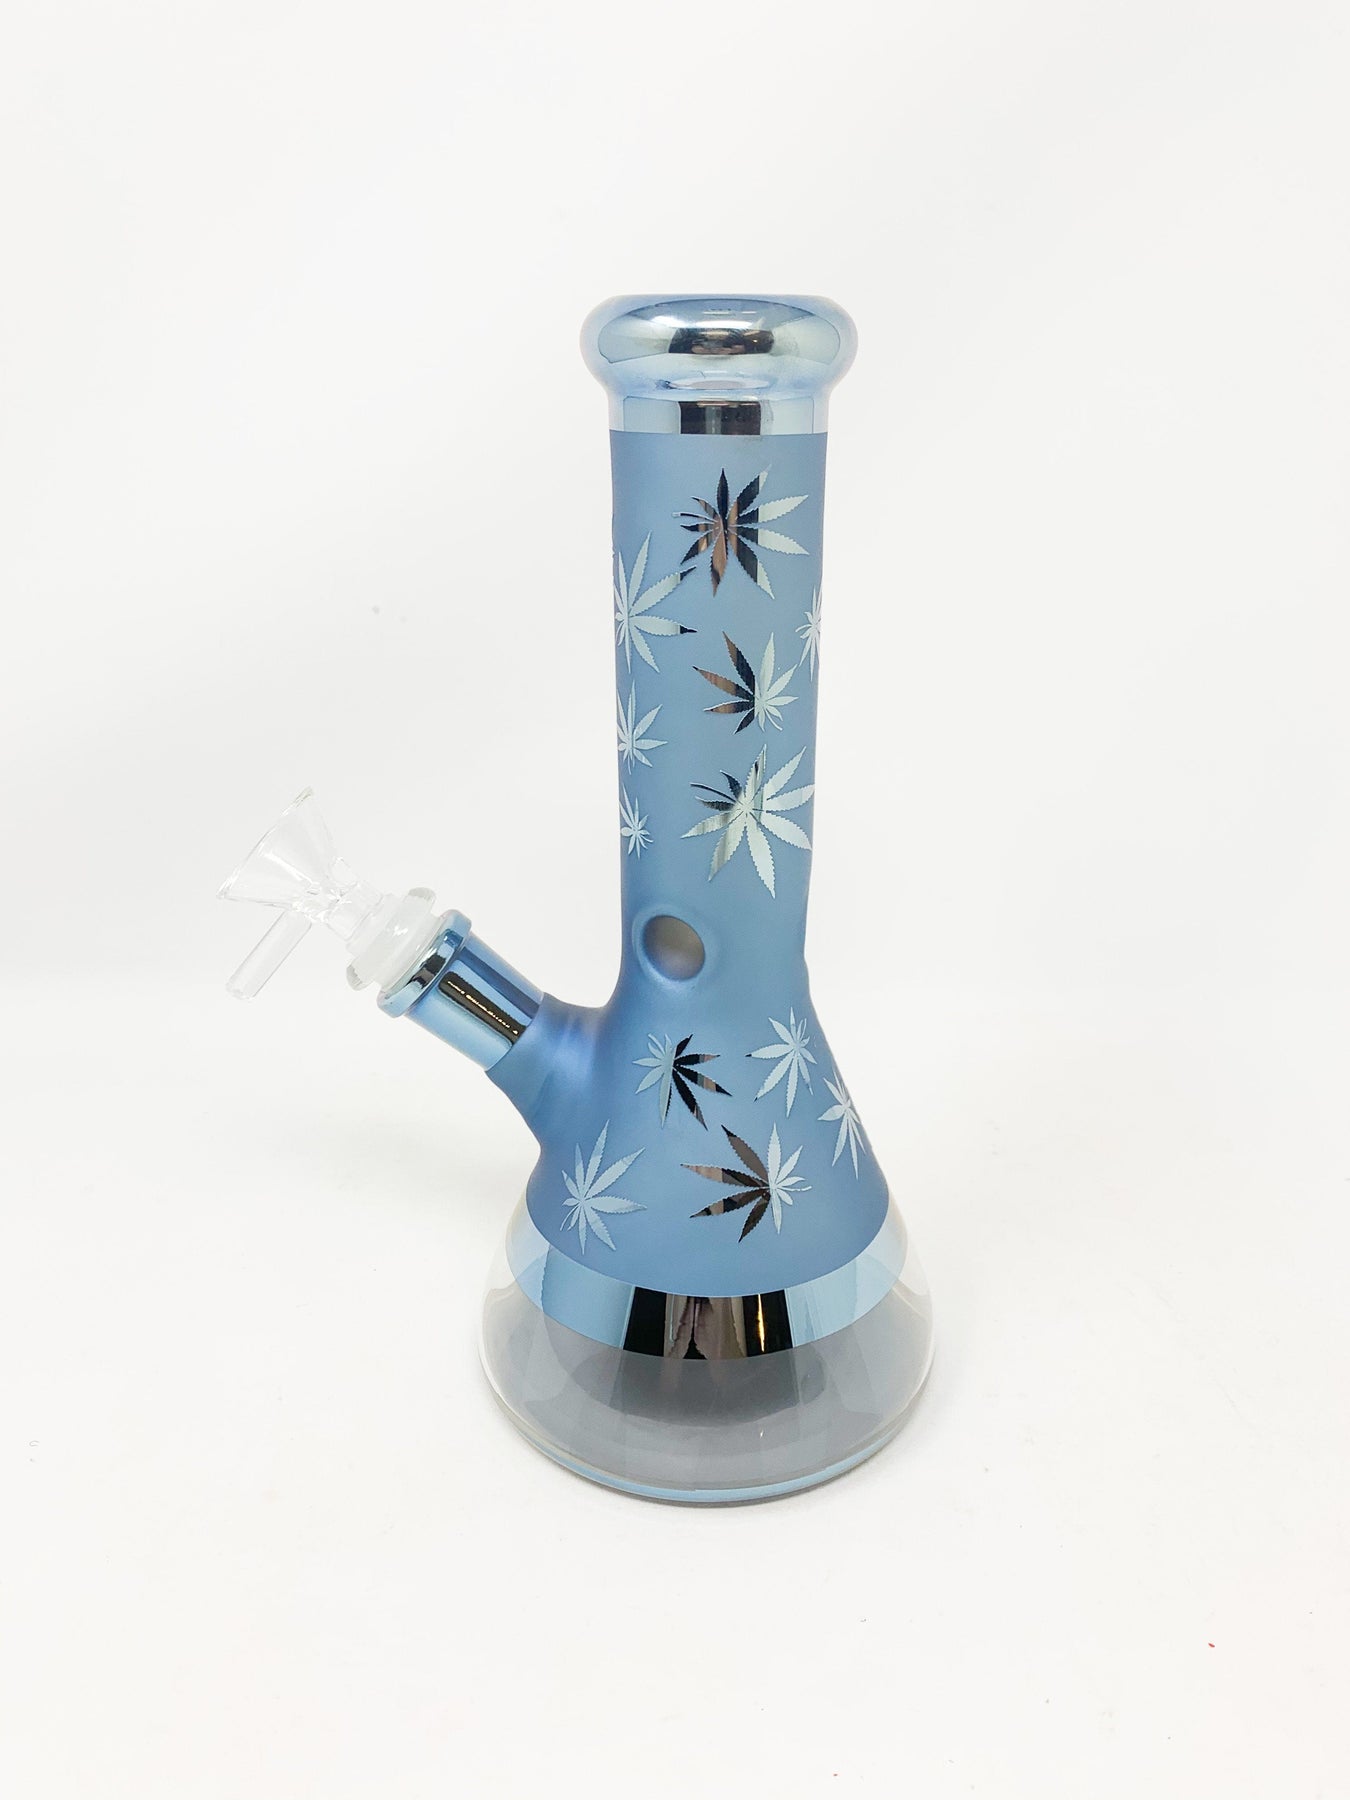 Colorful 8 Glass Beaker Bong featuring Marijuana Leaf Design & Downst